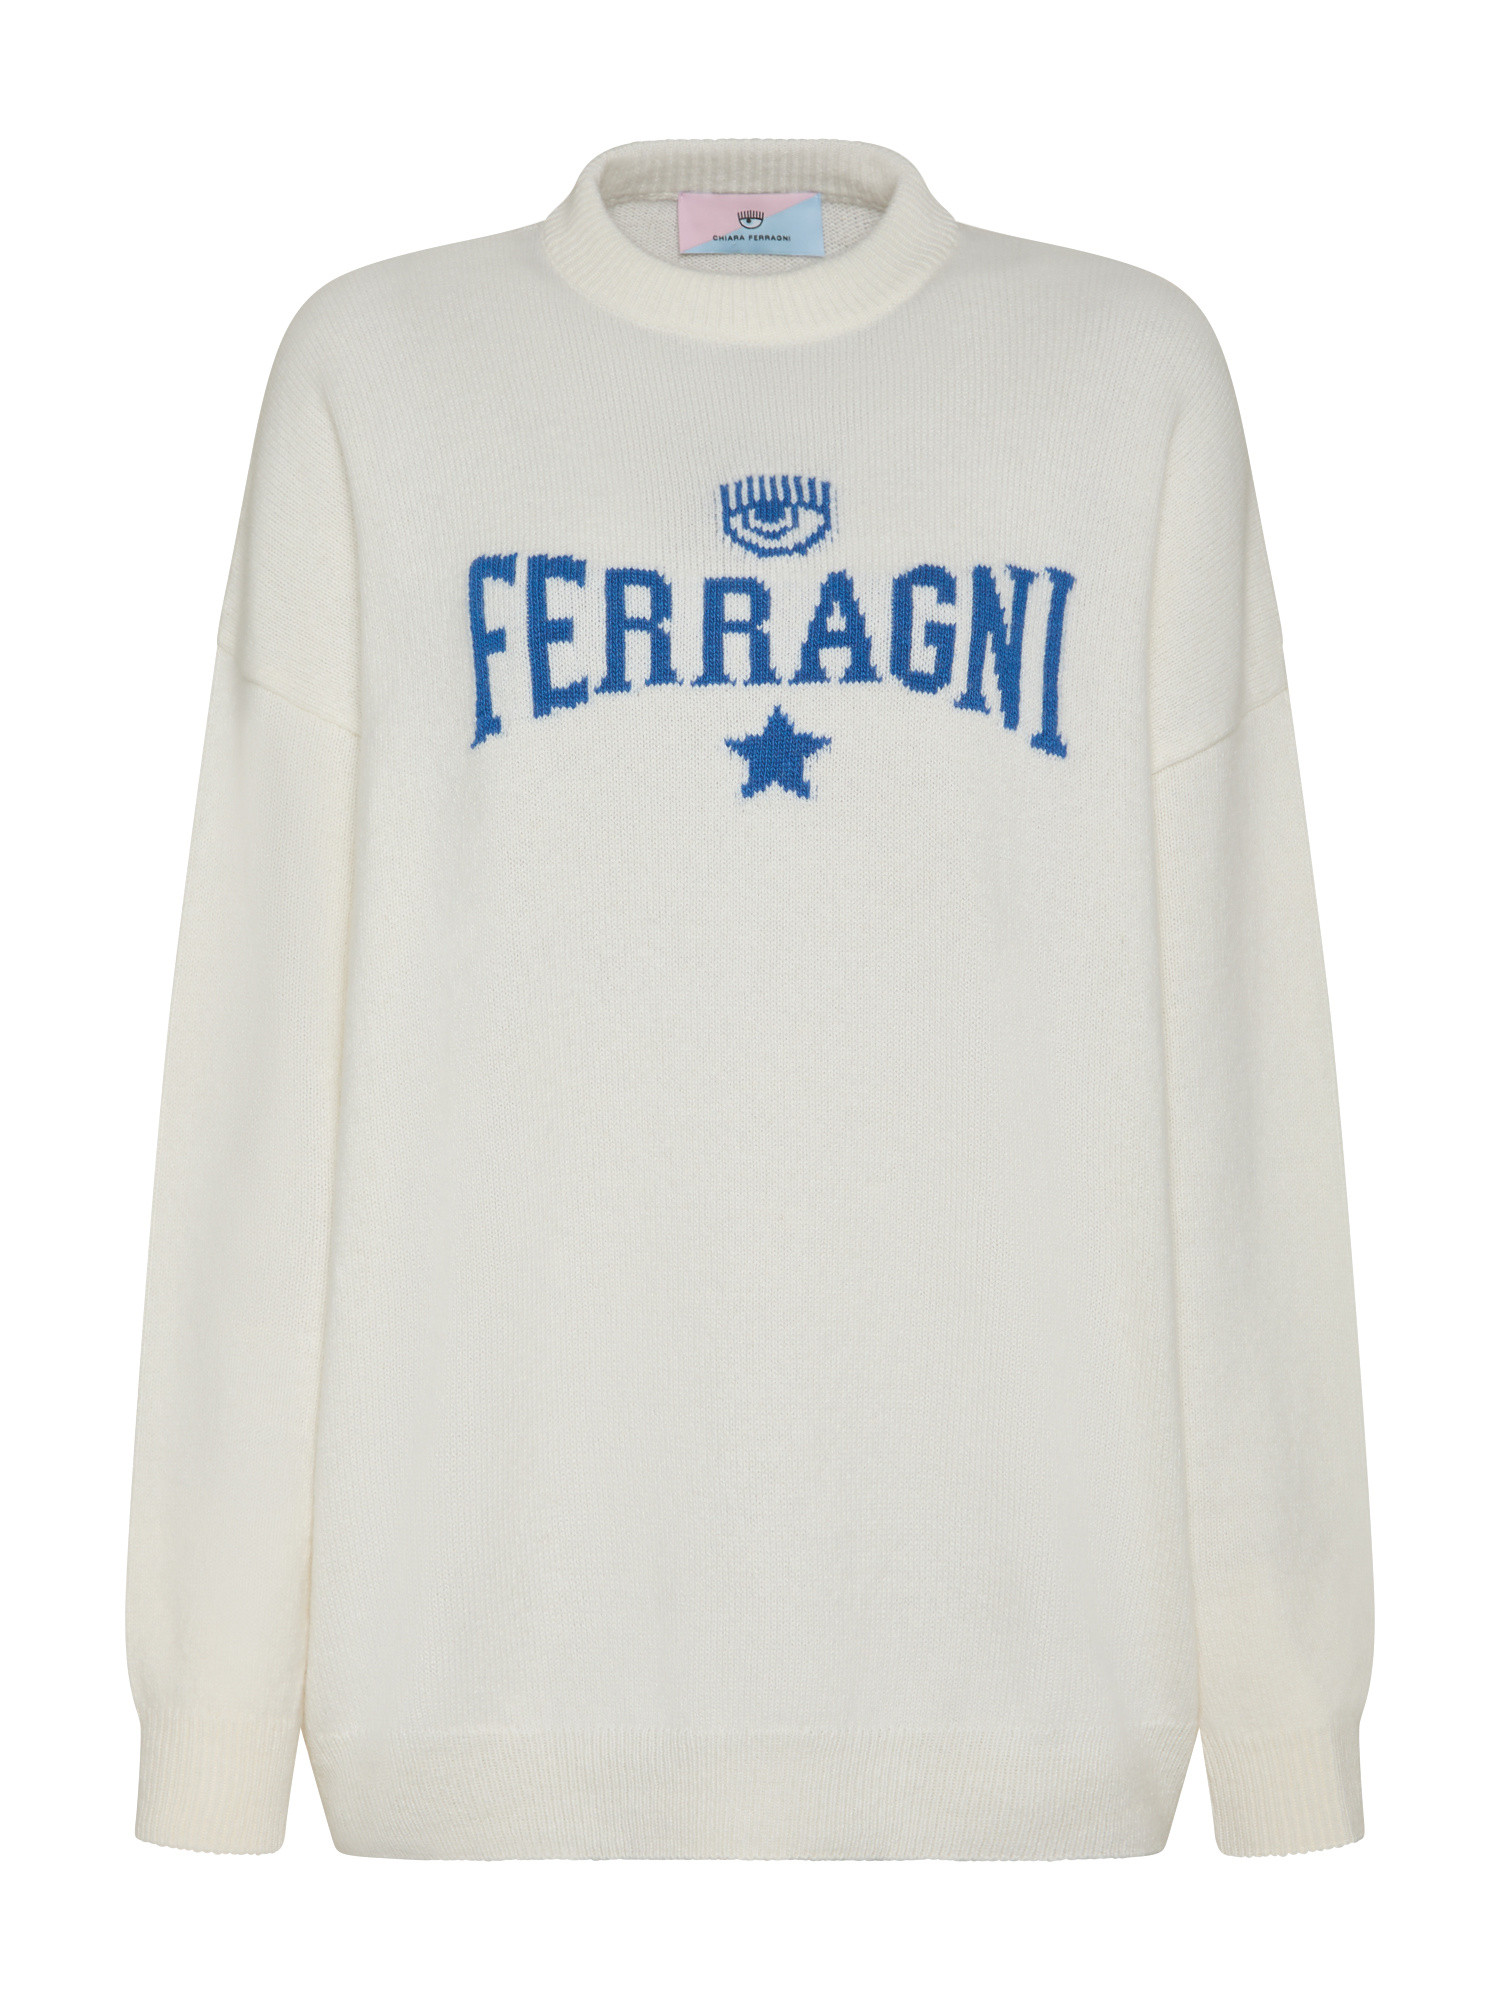 Chiara Ferragni эластичный свитер Ferragni, белый